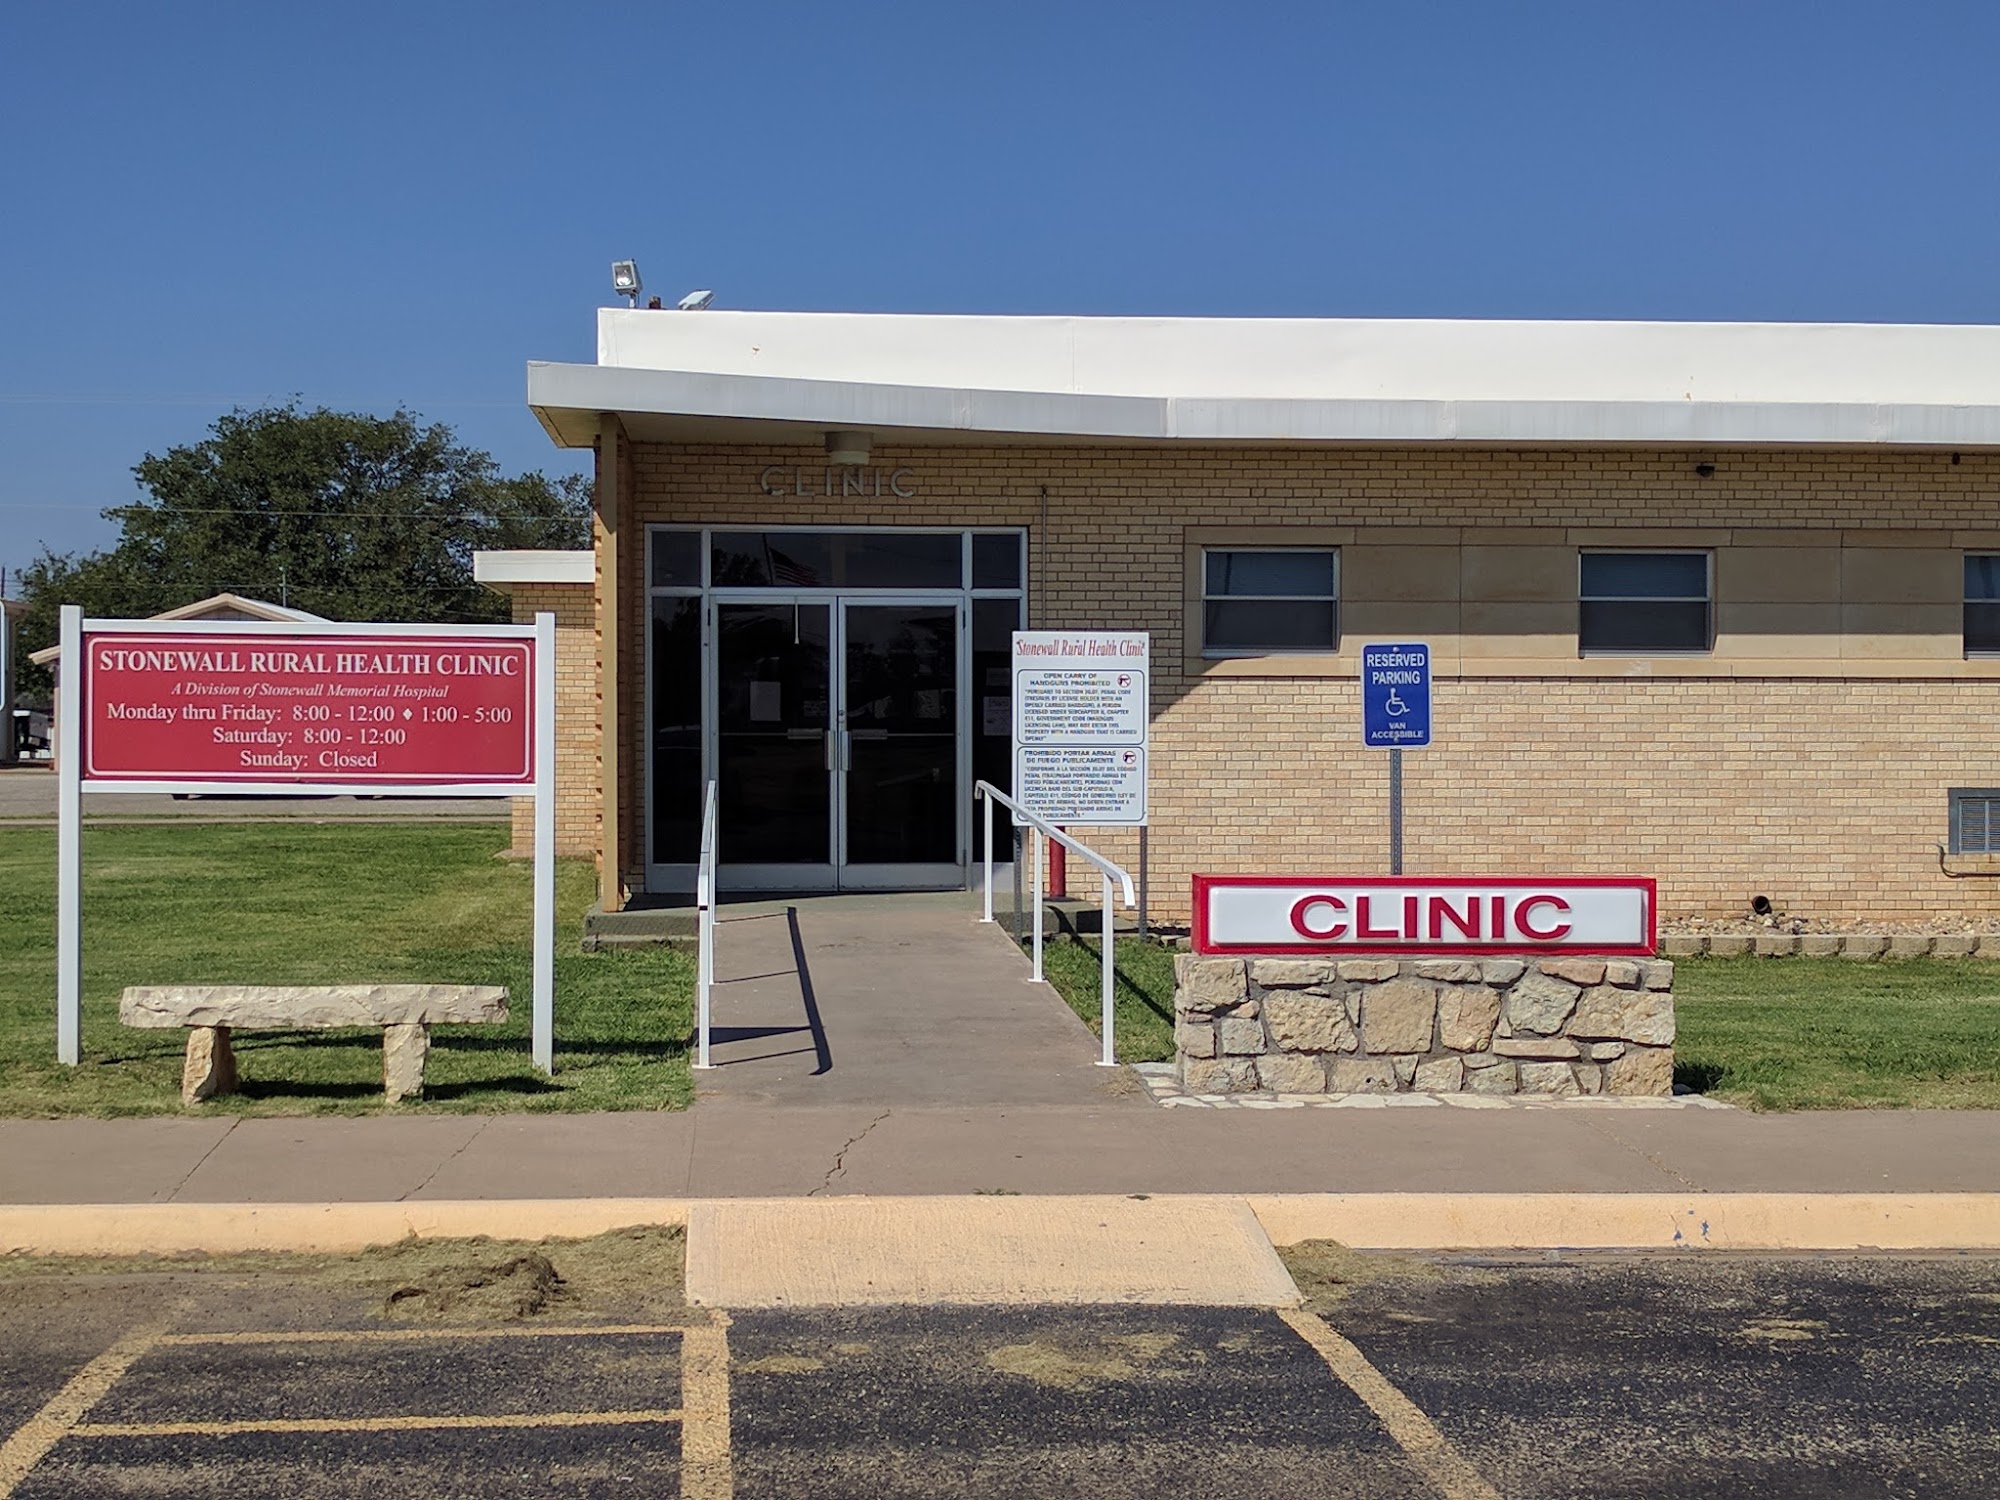 Stonewall Rural Health Clinic 819 Broadway St, Aspermont Texas 79502